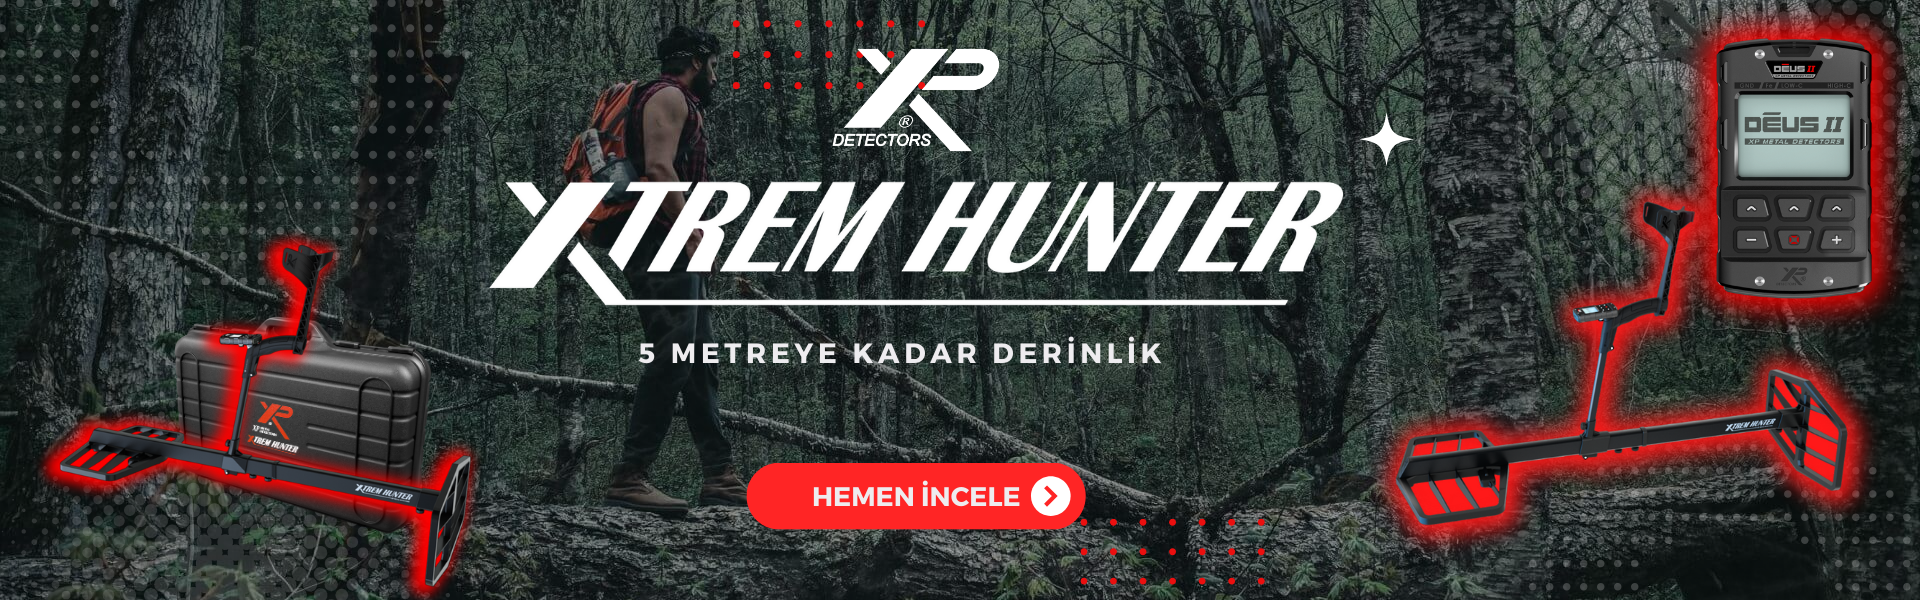 Xtrem Hunter